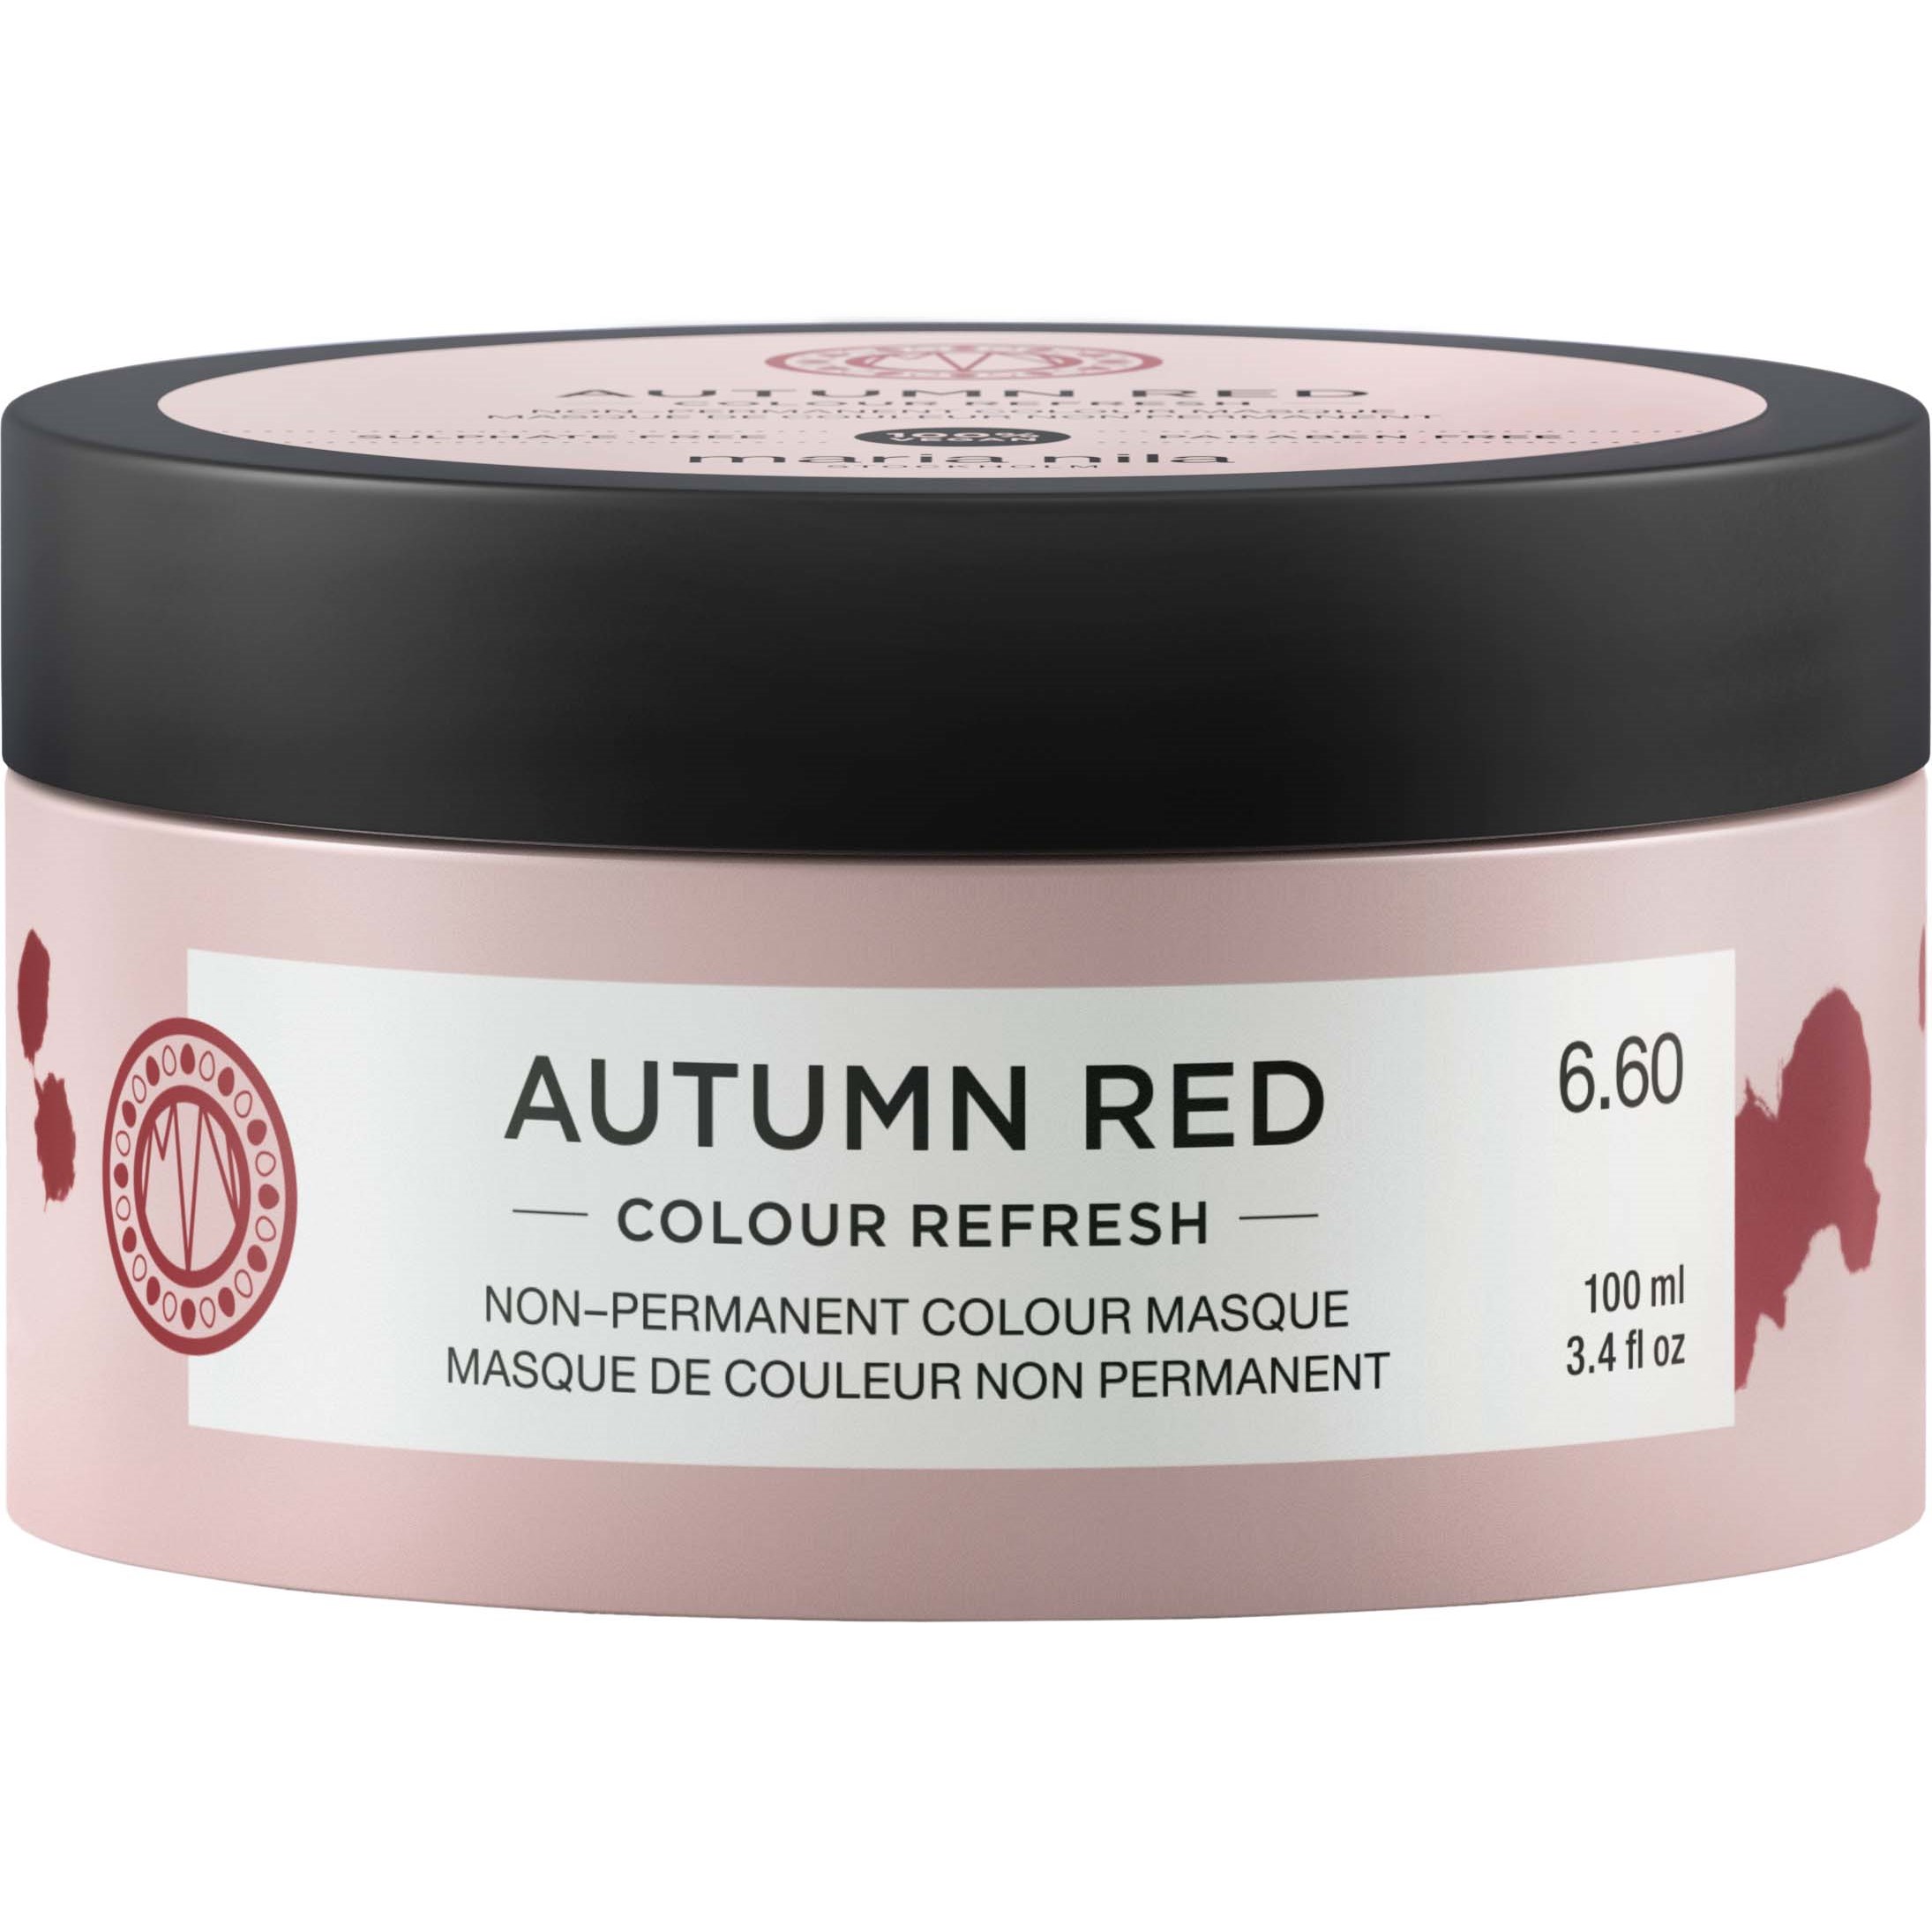 Maria Nila Colour Refresh Autumn Red, 100ml